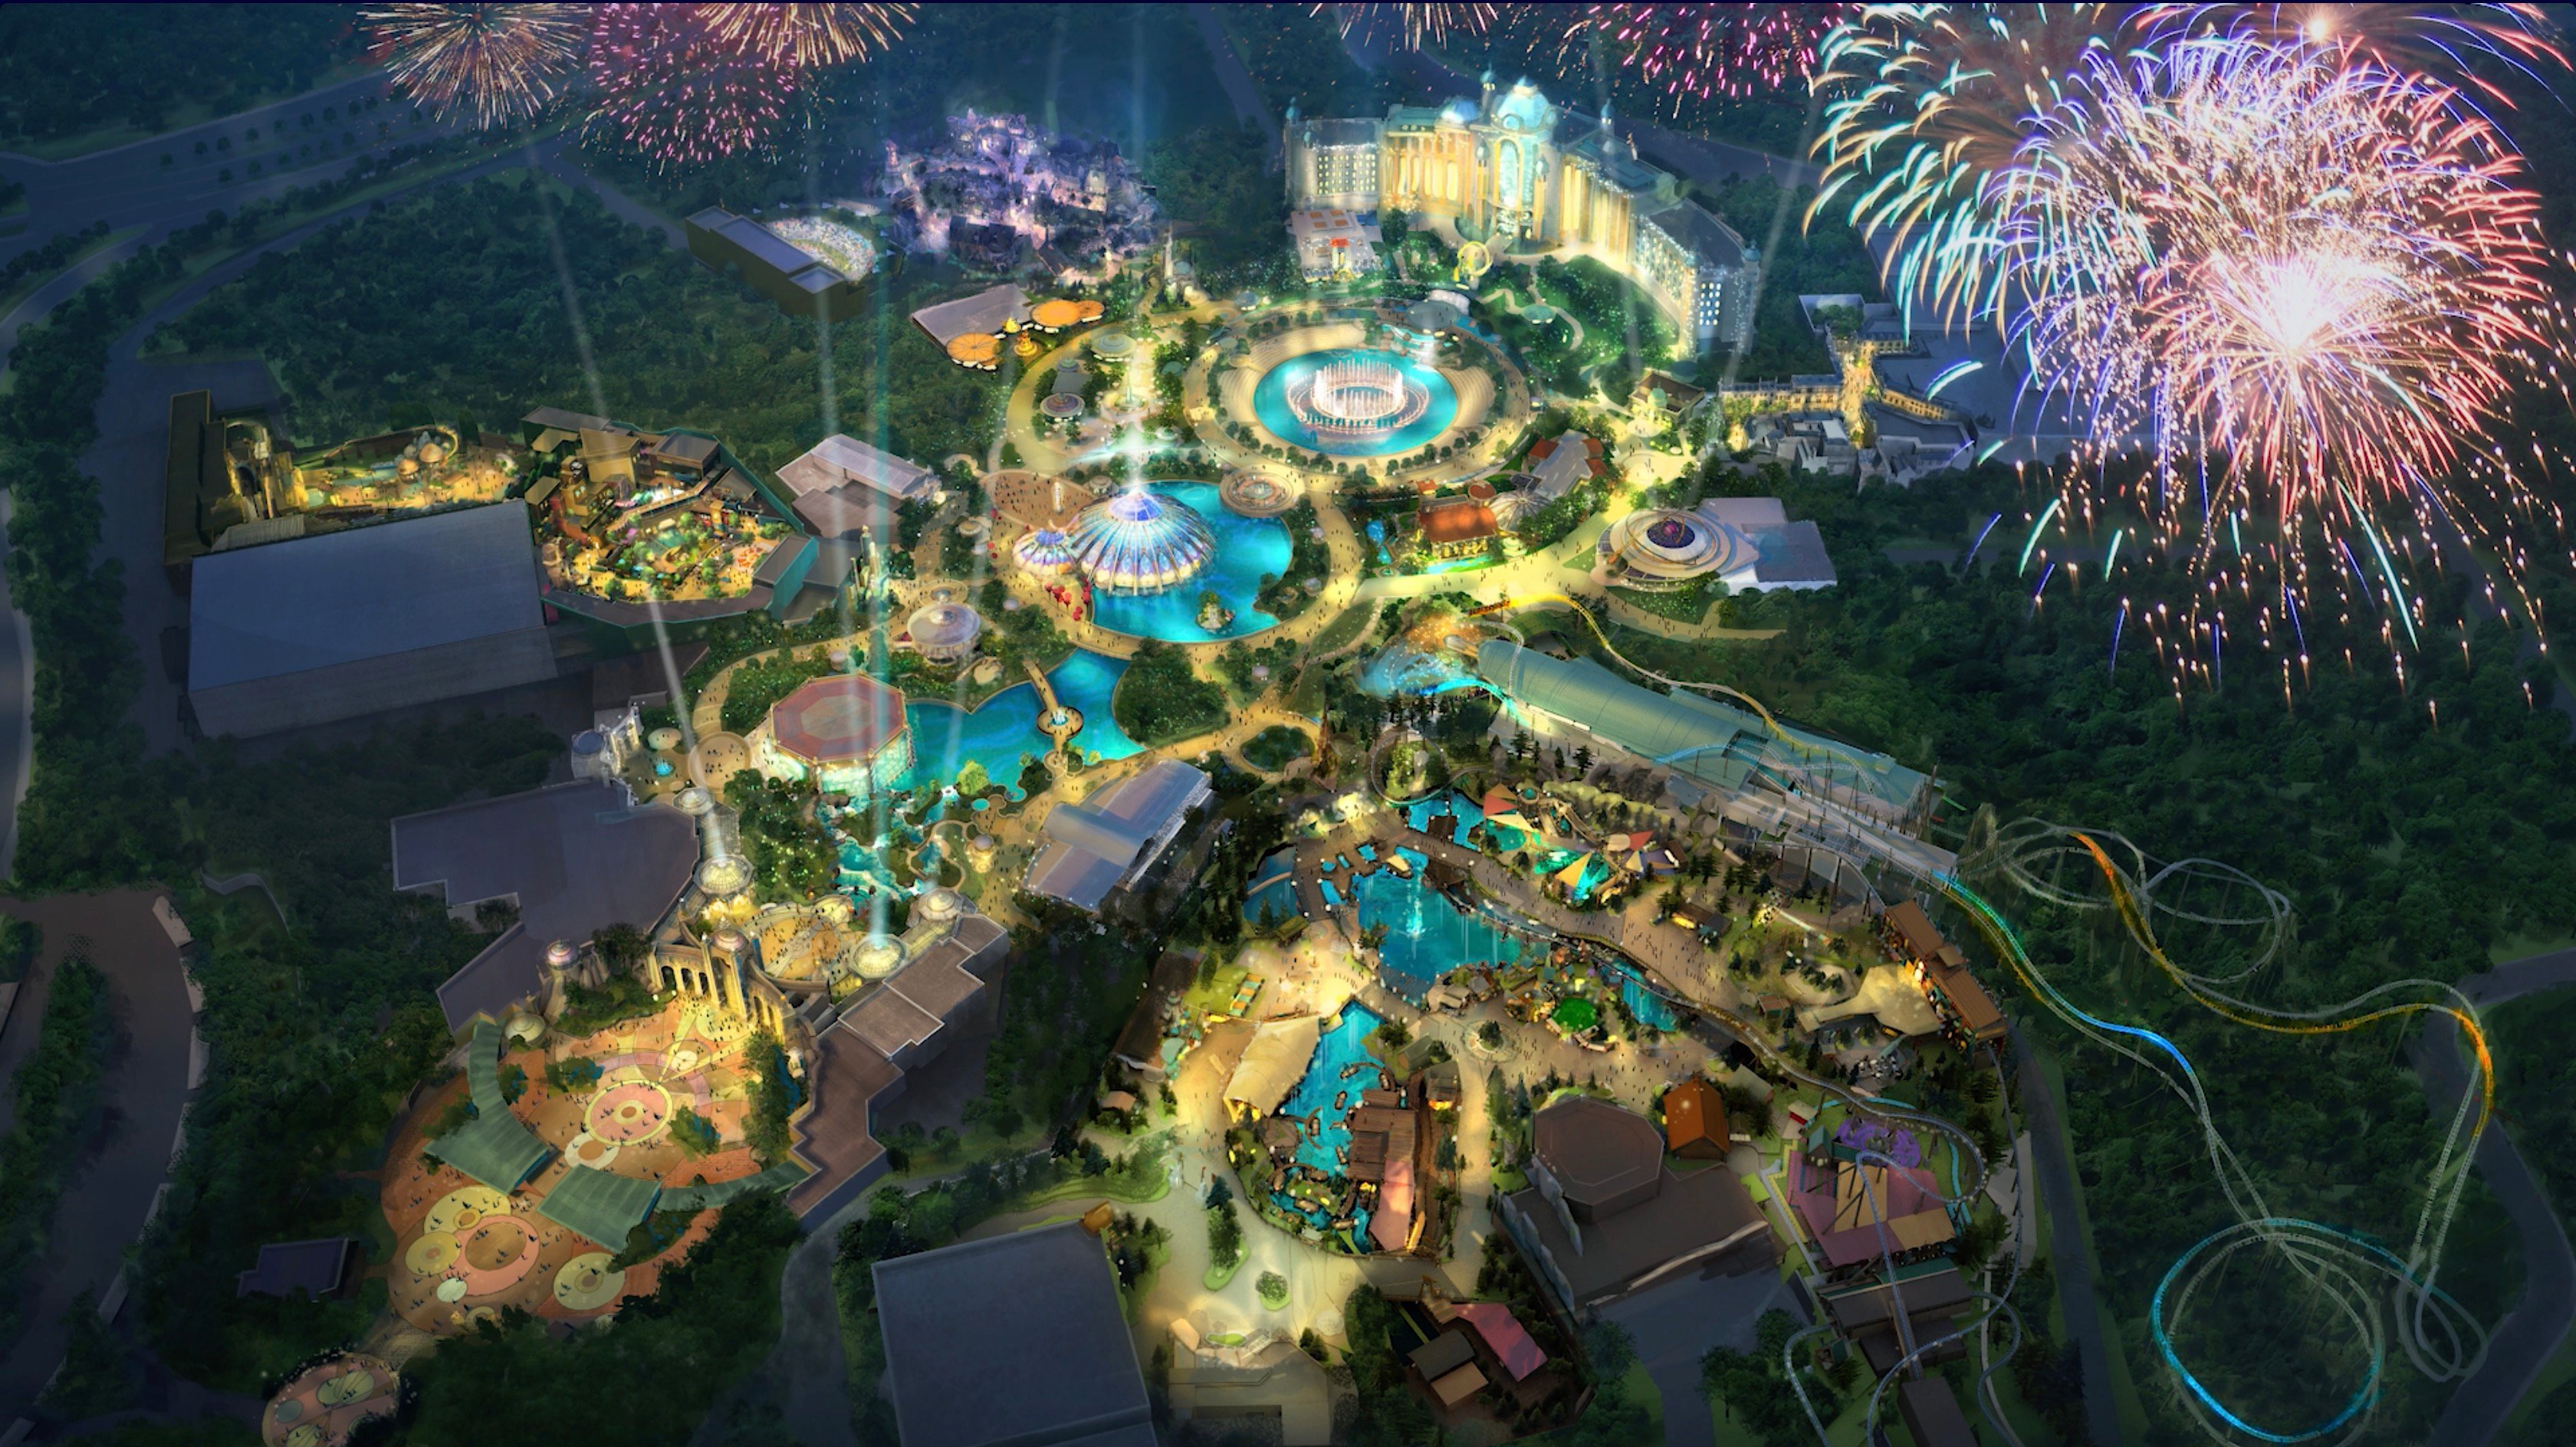 Universal Orlando Announces New Theme Park Epic Universe With